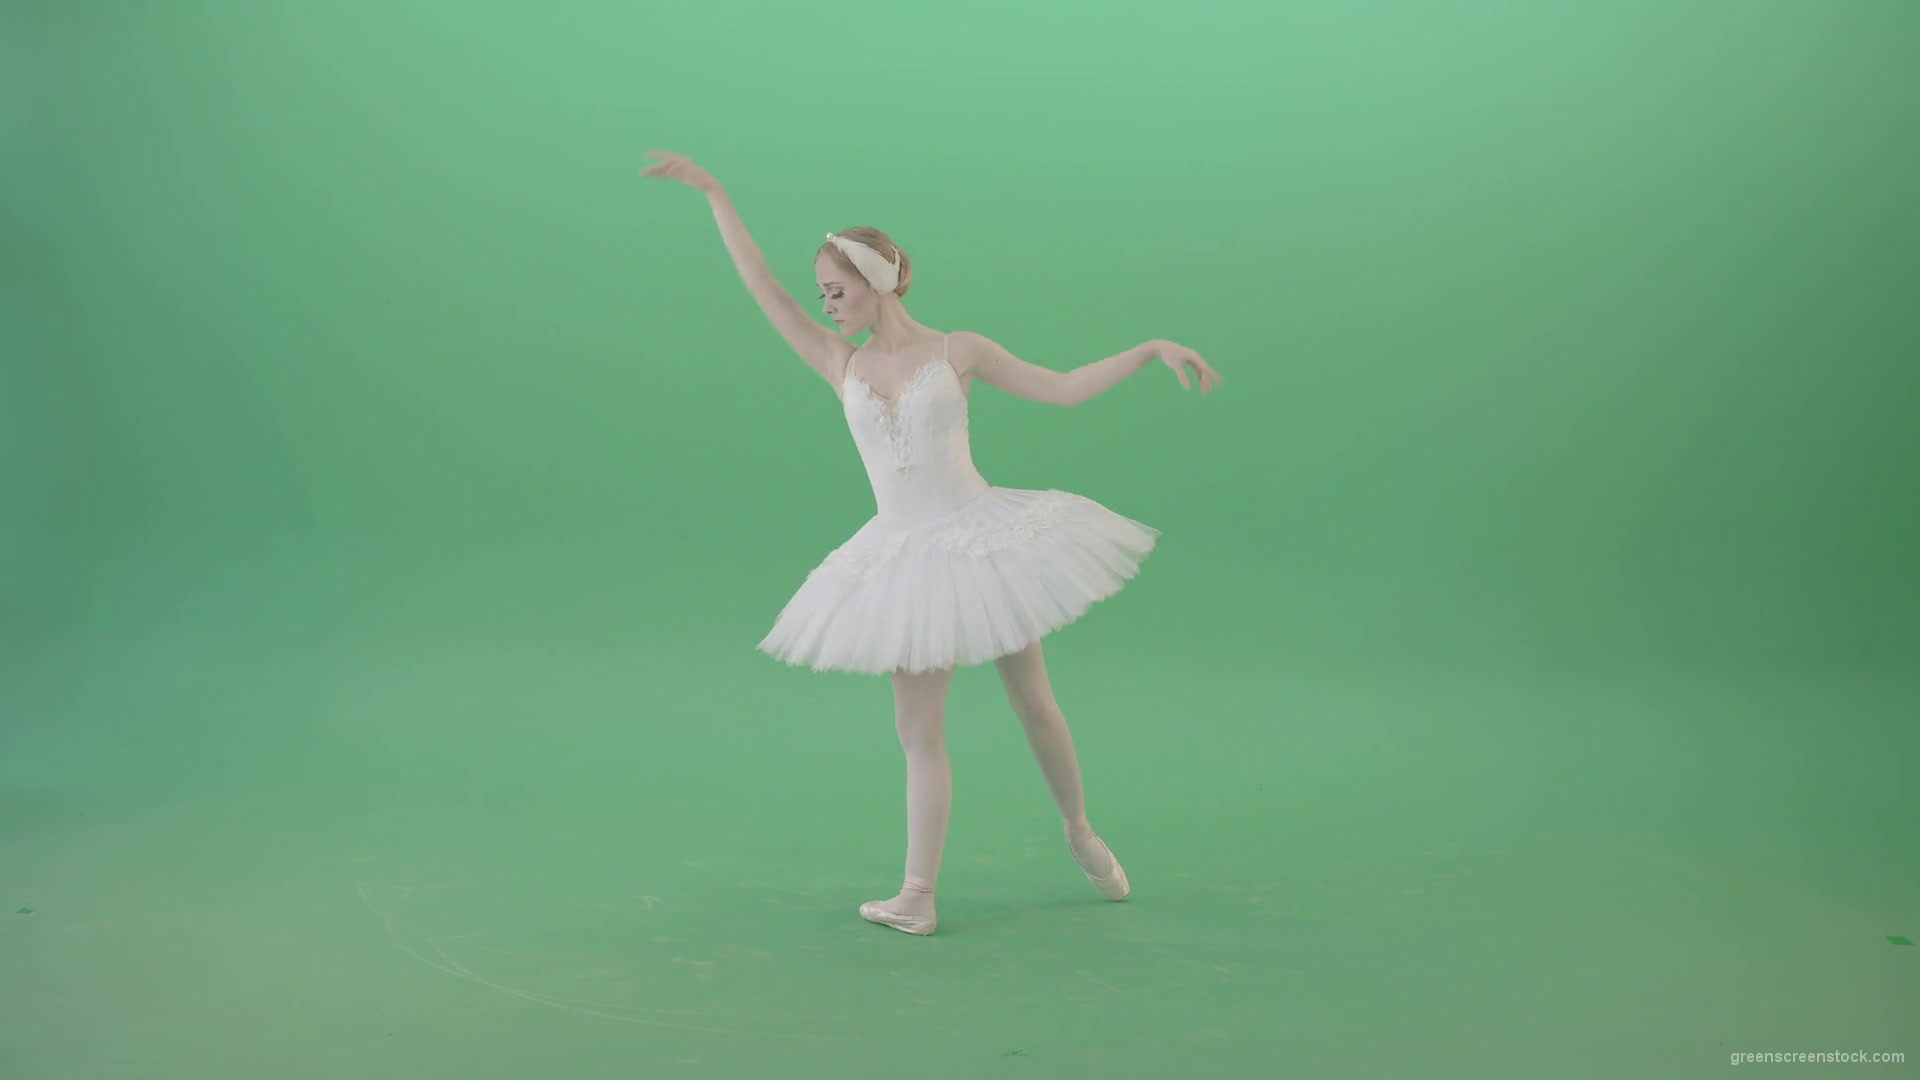 Elegant-snowwhite-ballet-dancer-ballerina-dancing-isolated-on-Green-Screen-4K-Video-Footage-1920_005 Green Screen Stock